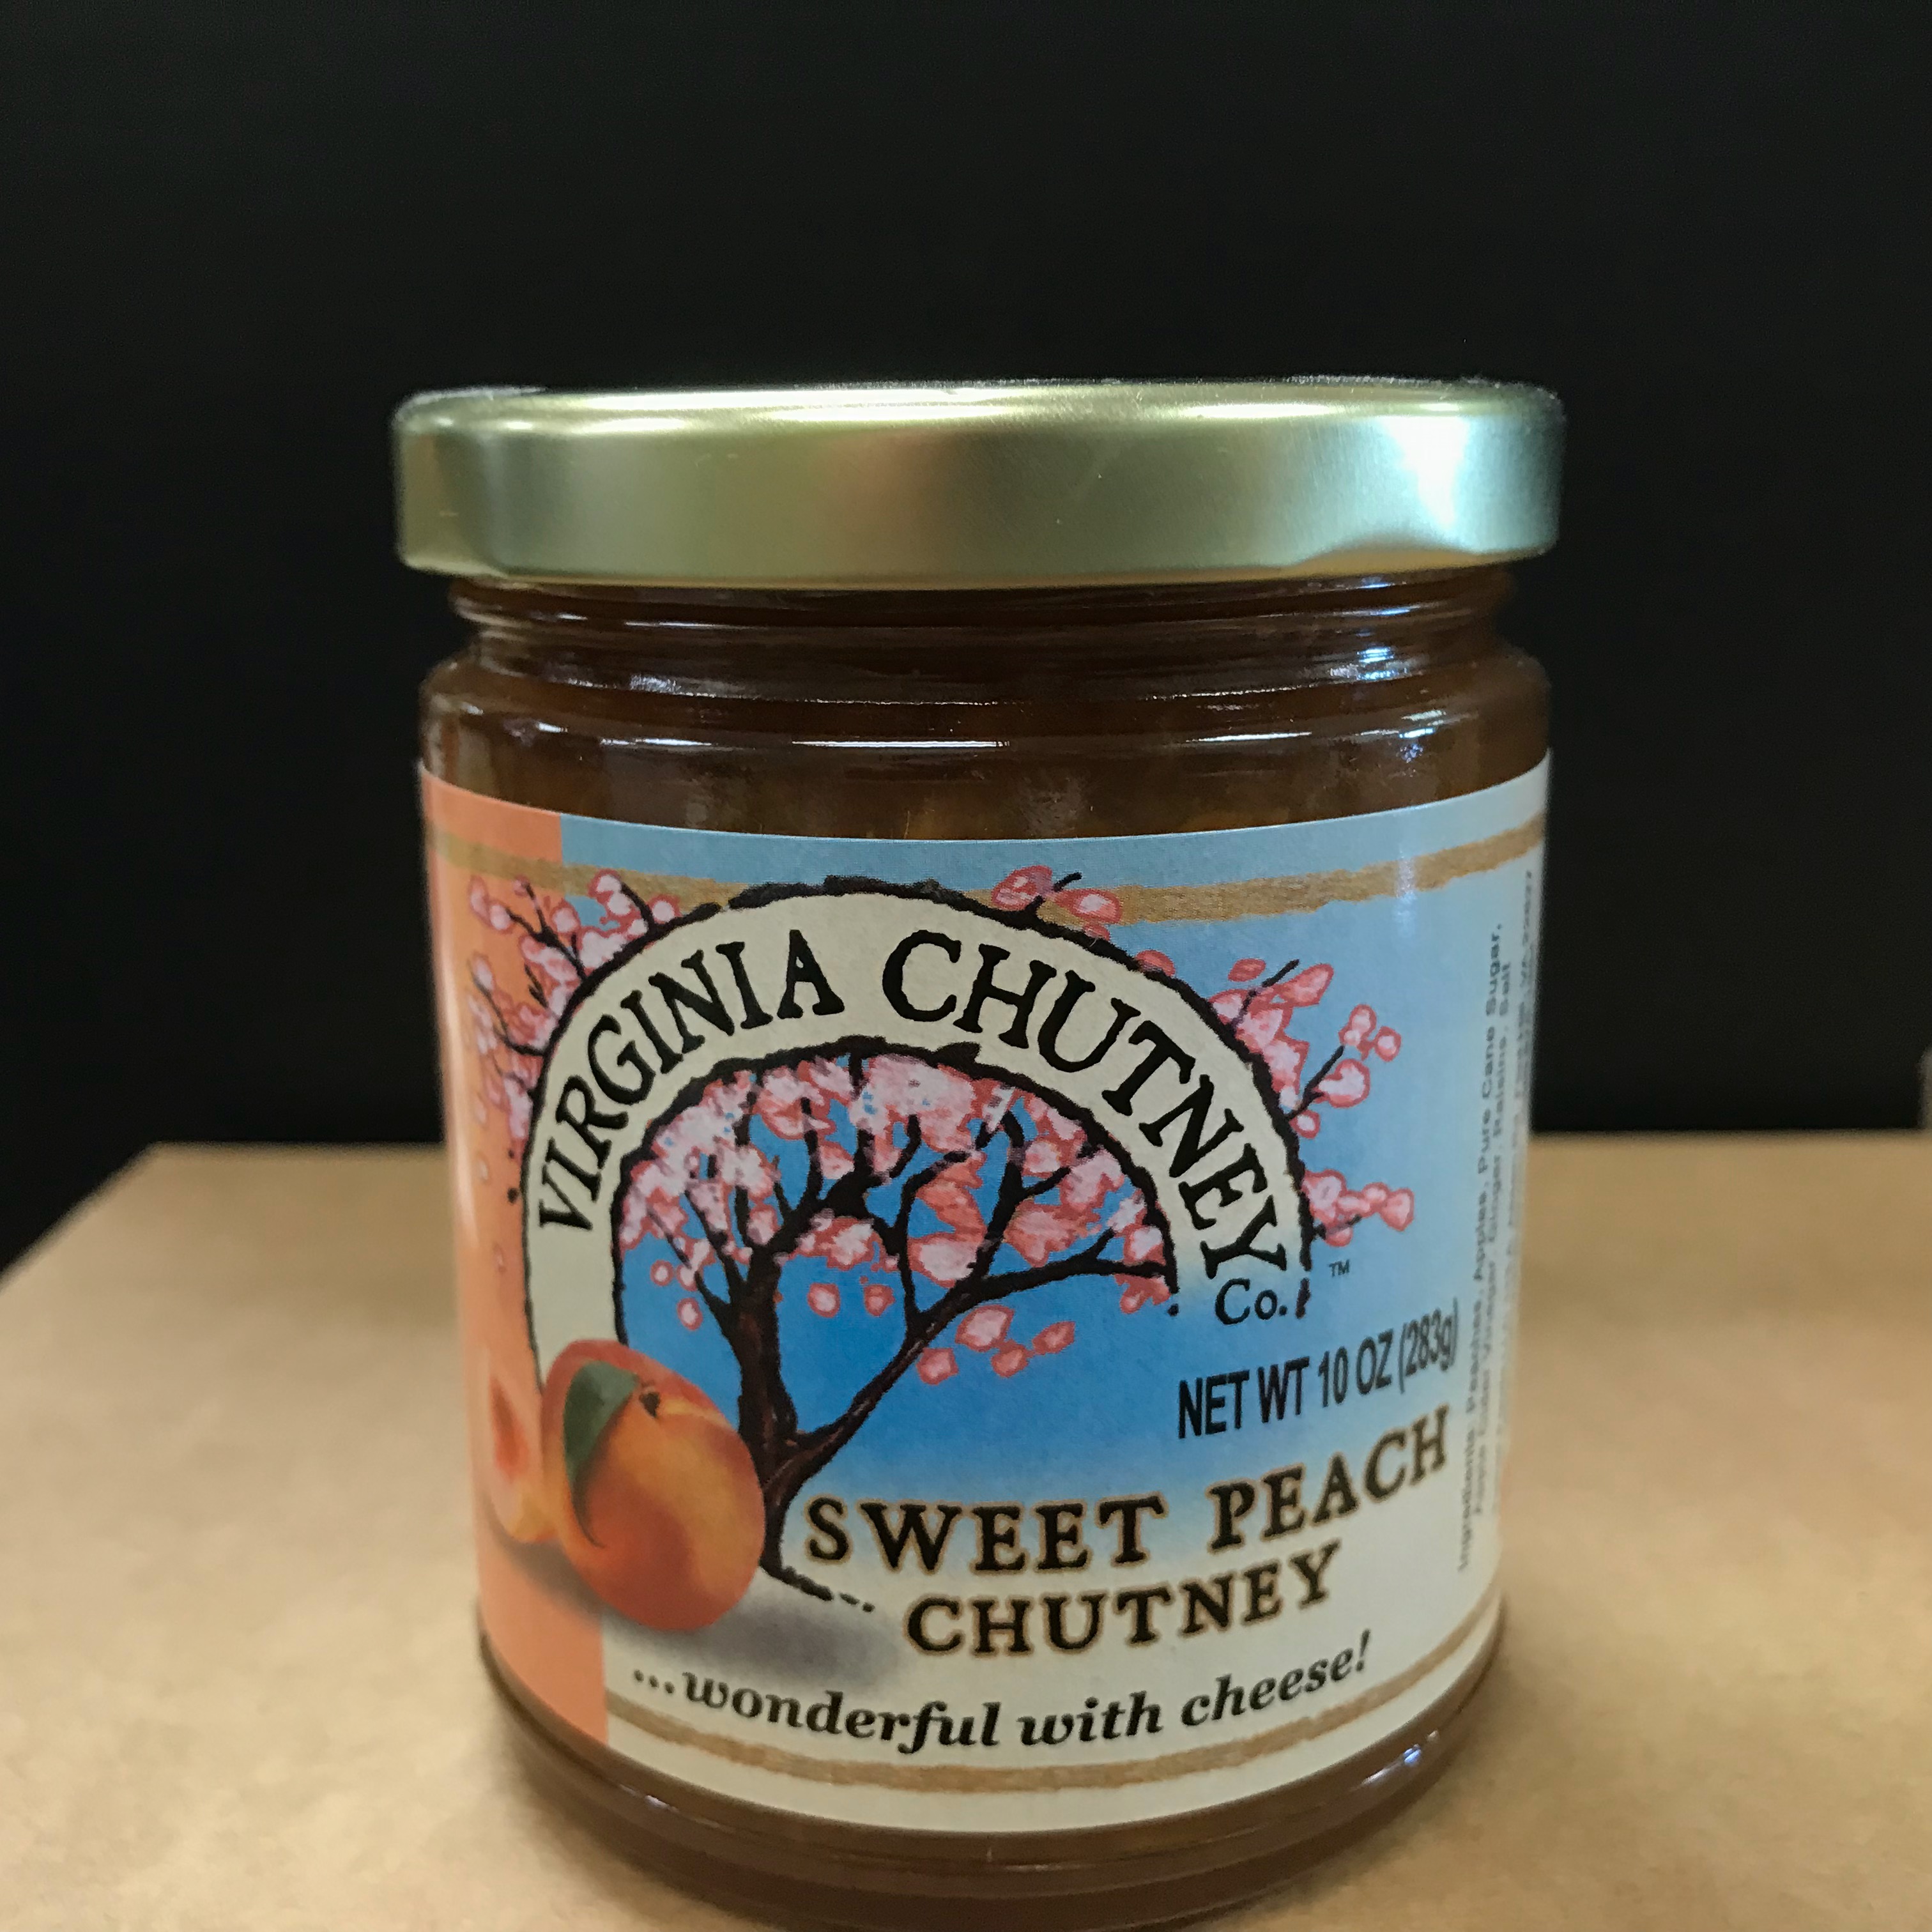 Virginia Chutney Sweet Peach Chutney 10 oz